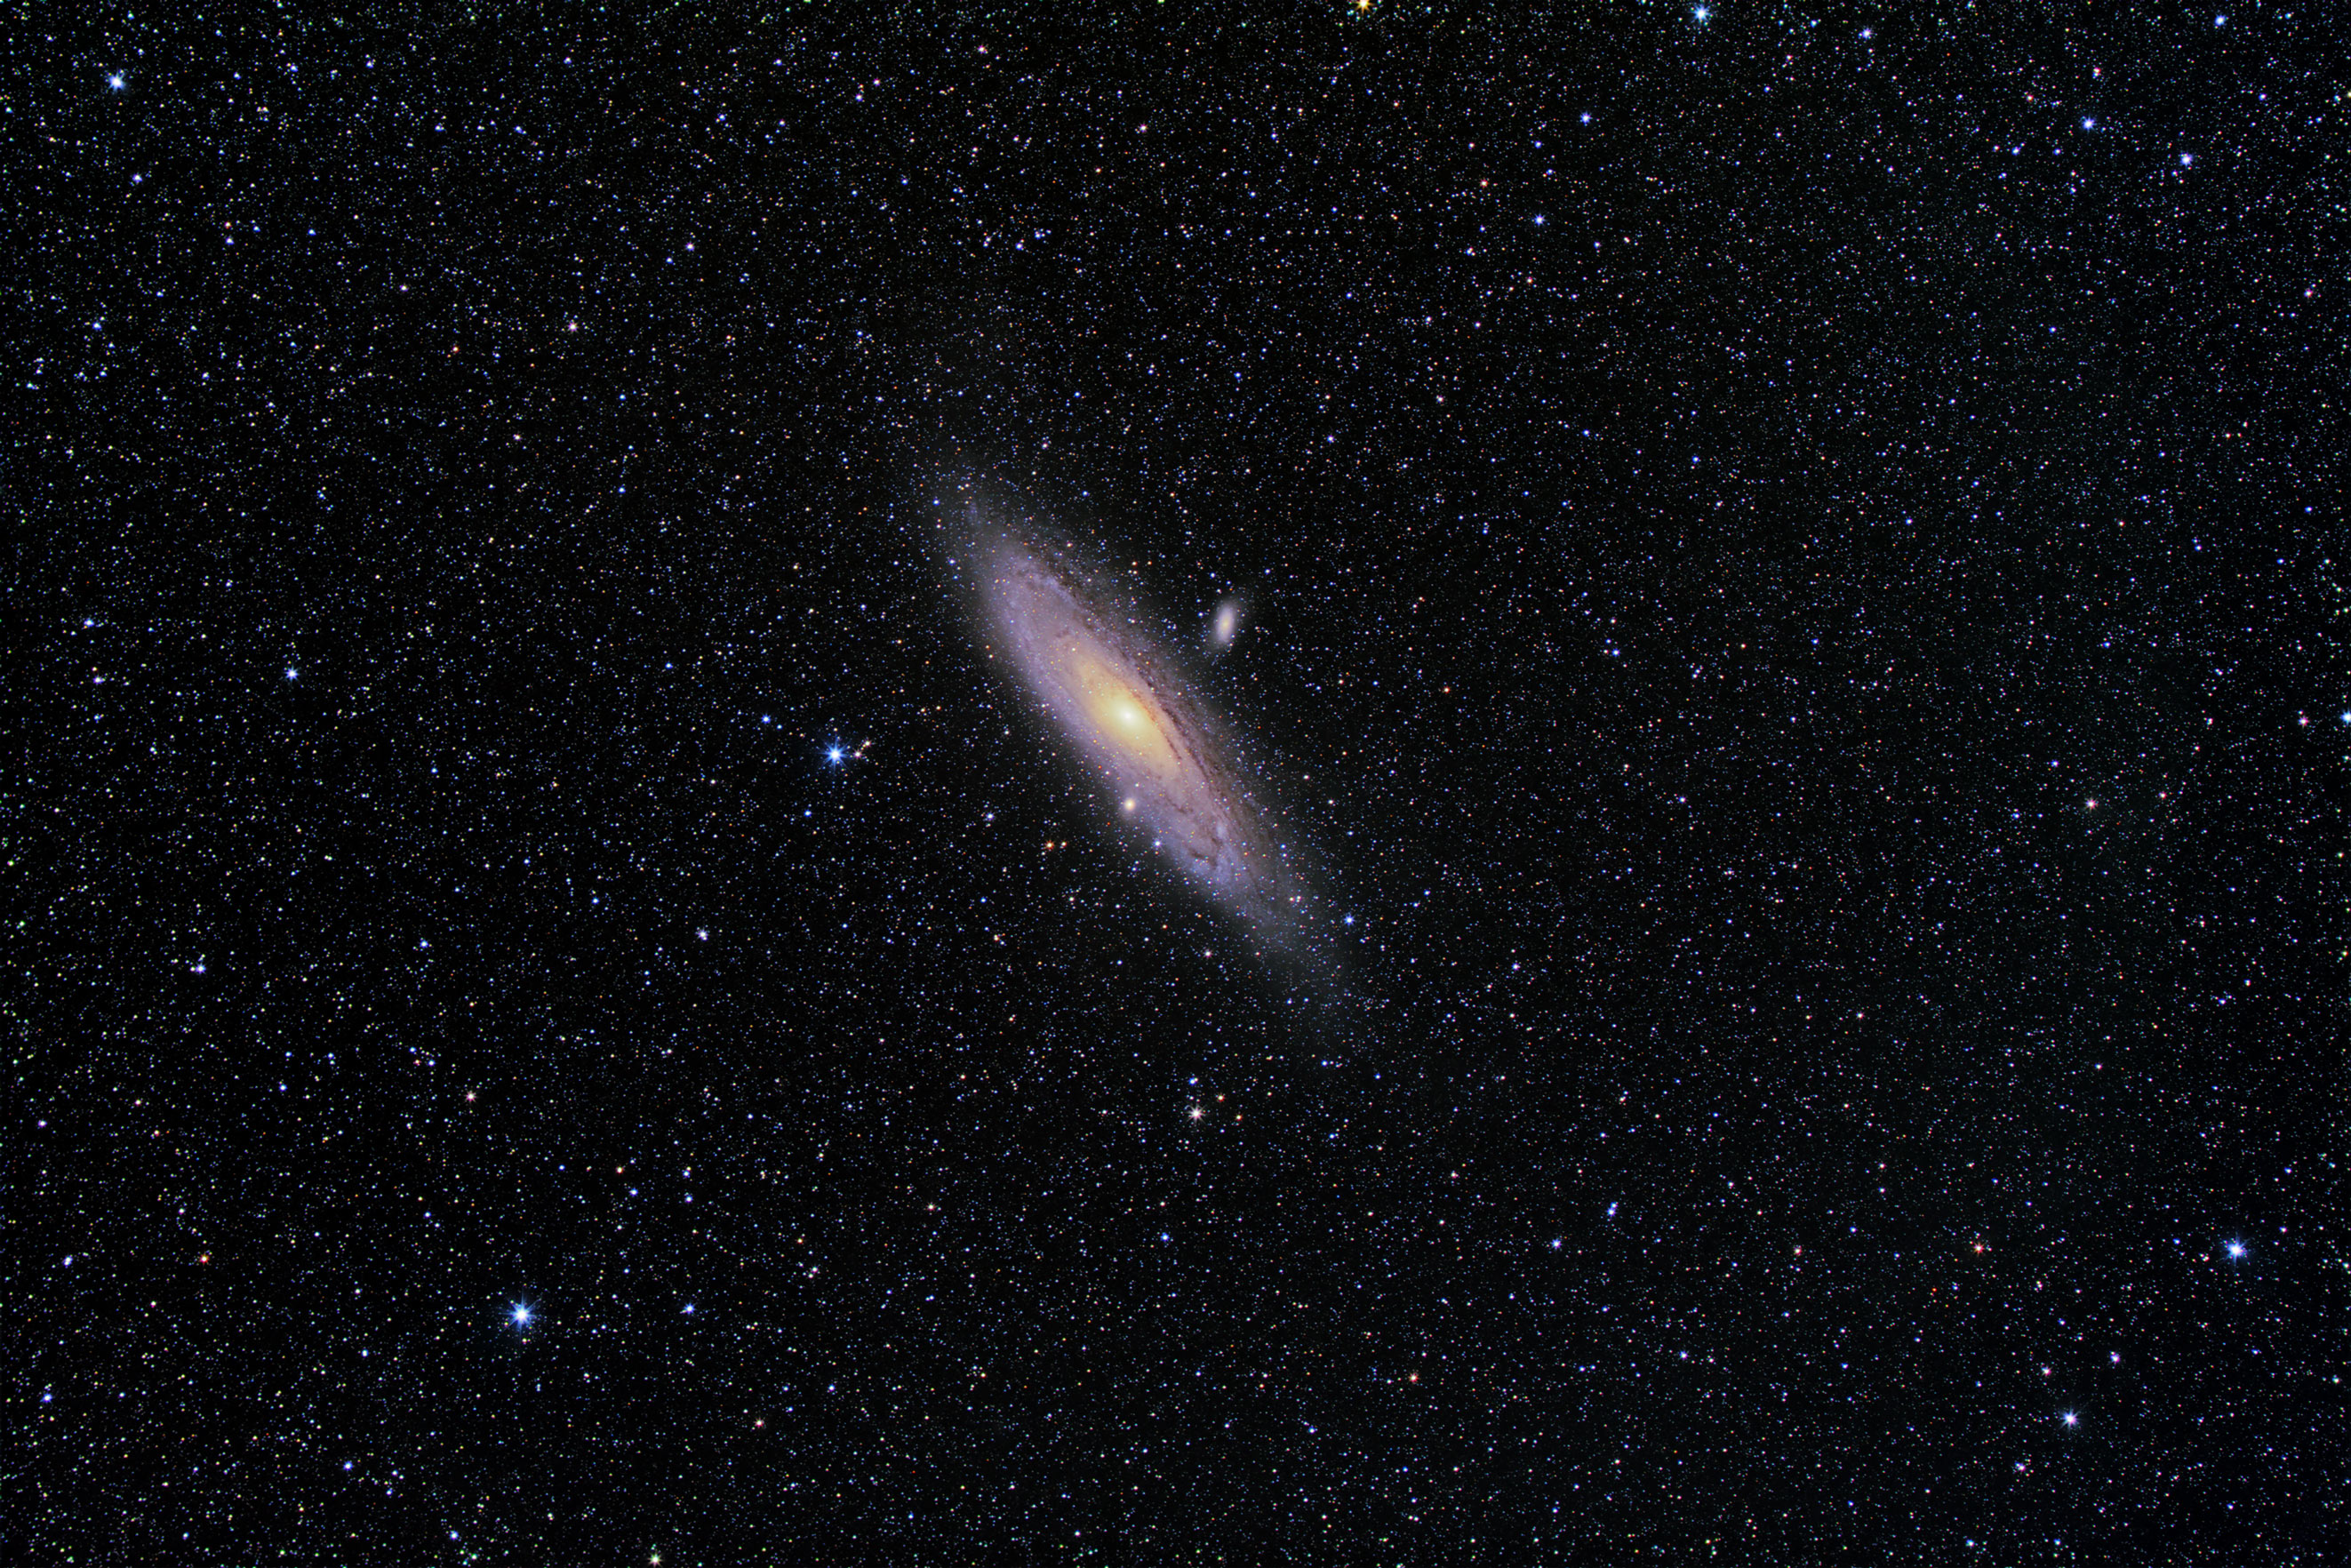 M31 Widefield